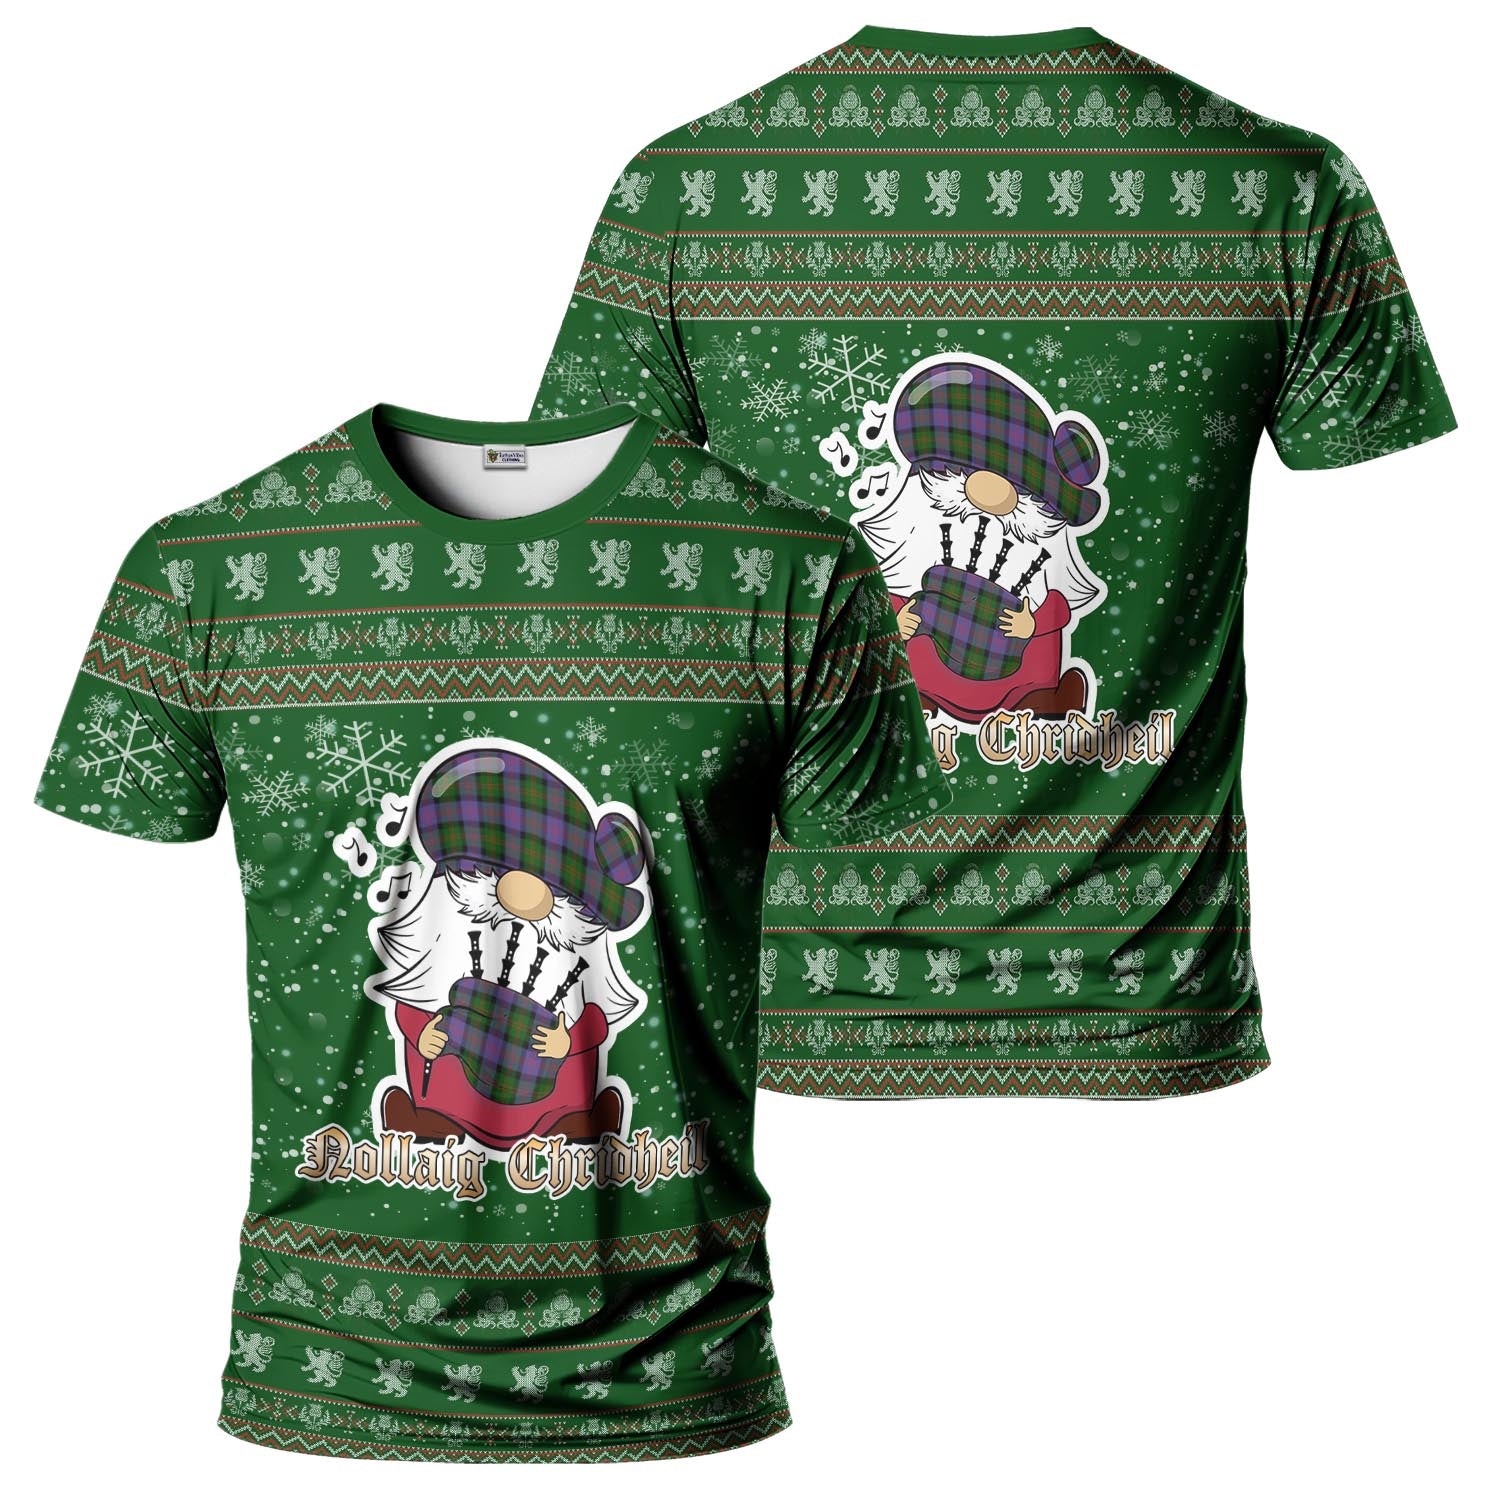 Blair Modern Clan Christmas Family T-Shirt with Funny Gnome Playing Bagpipes Men's Shirt Green - Tartanvibesclothing